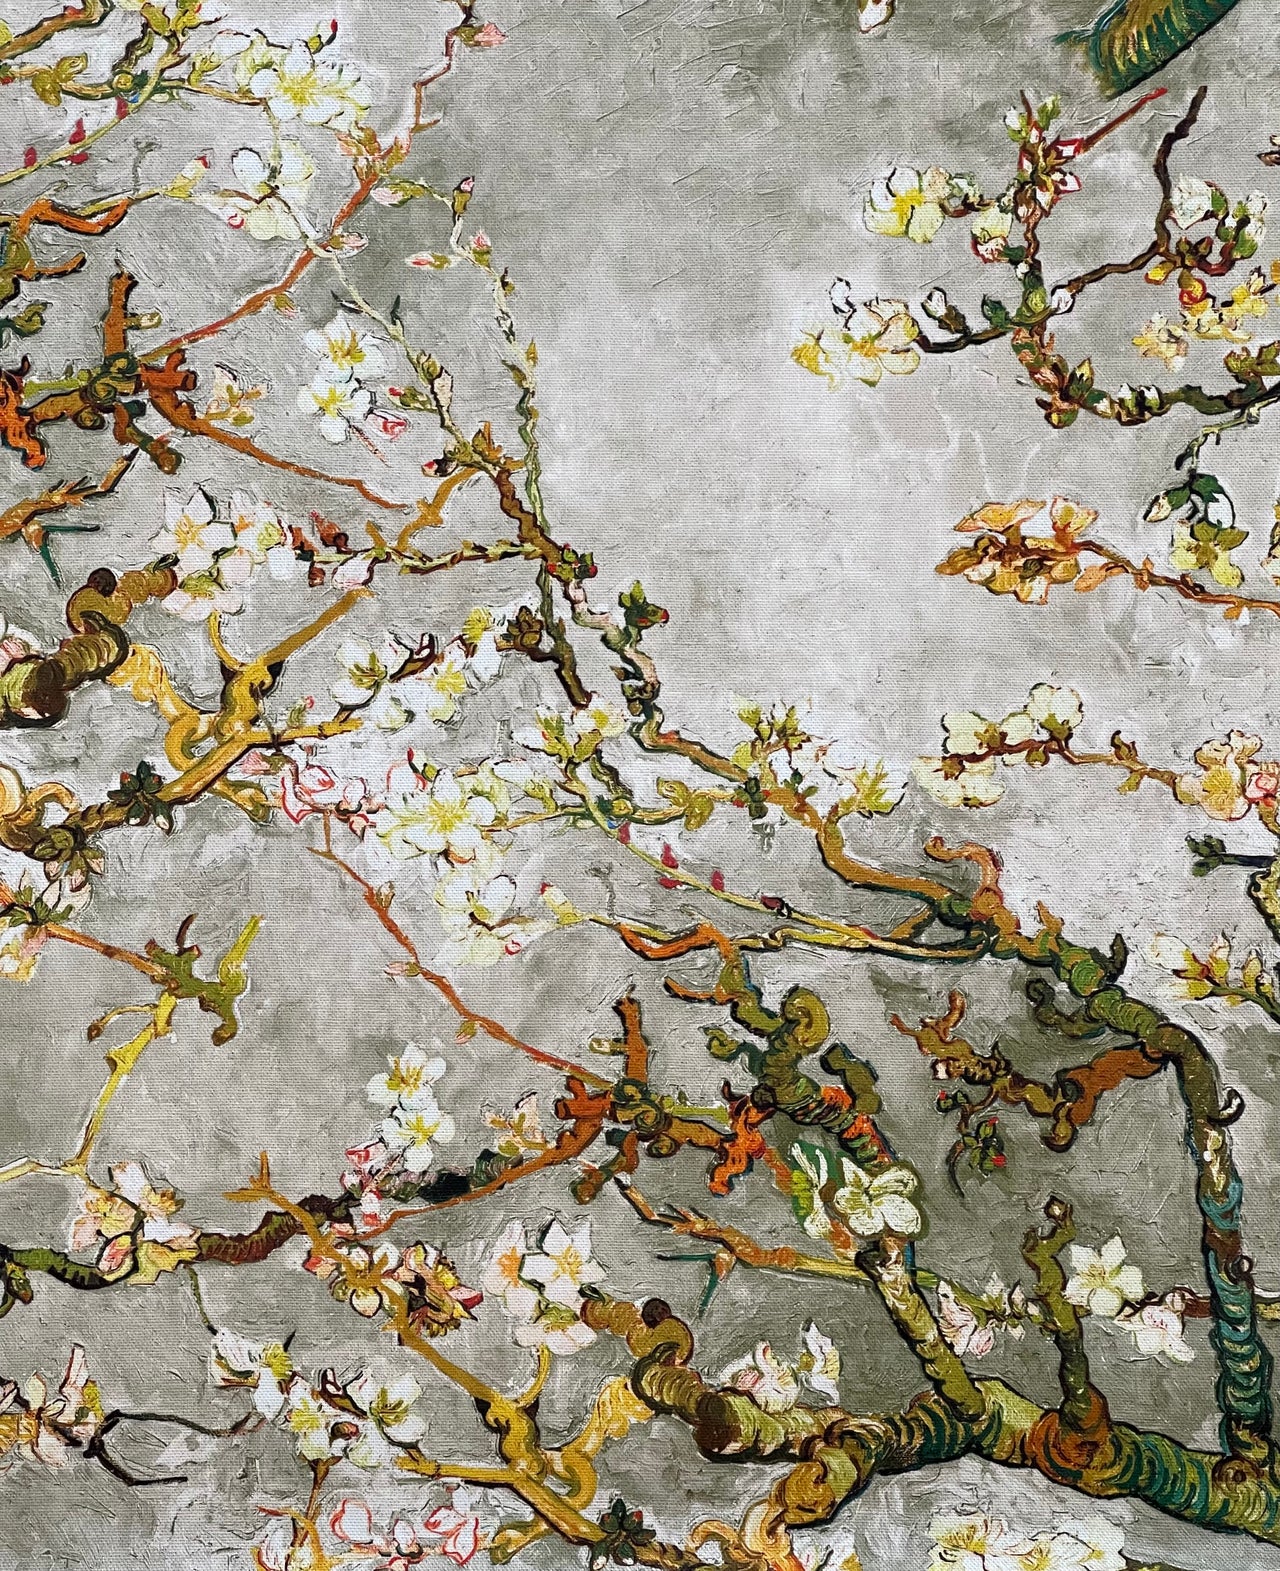 Custom Light Grey Roman Blinds / Almond Blossom Van Gogh Pattern / Made to Measure Window Treatments